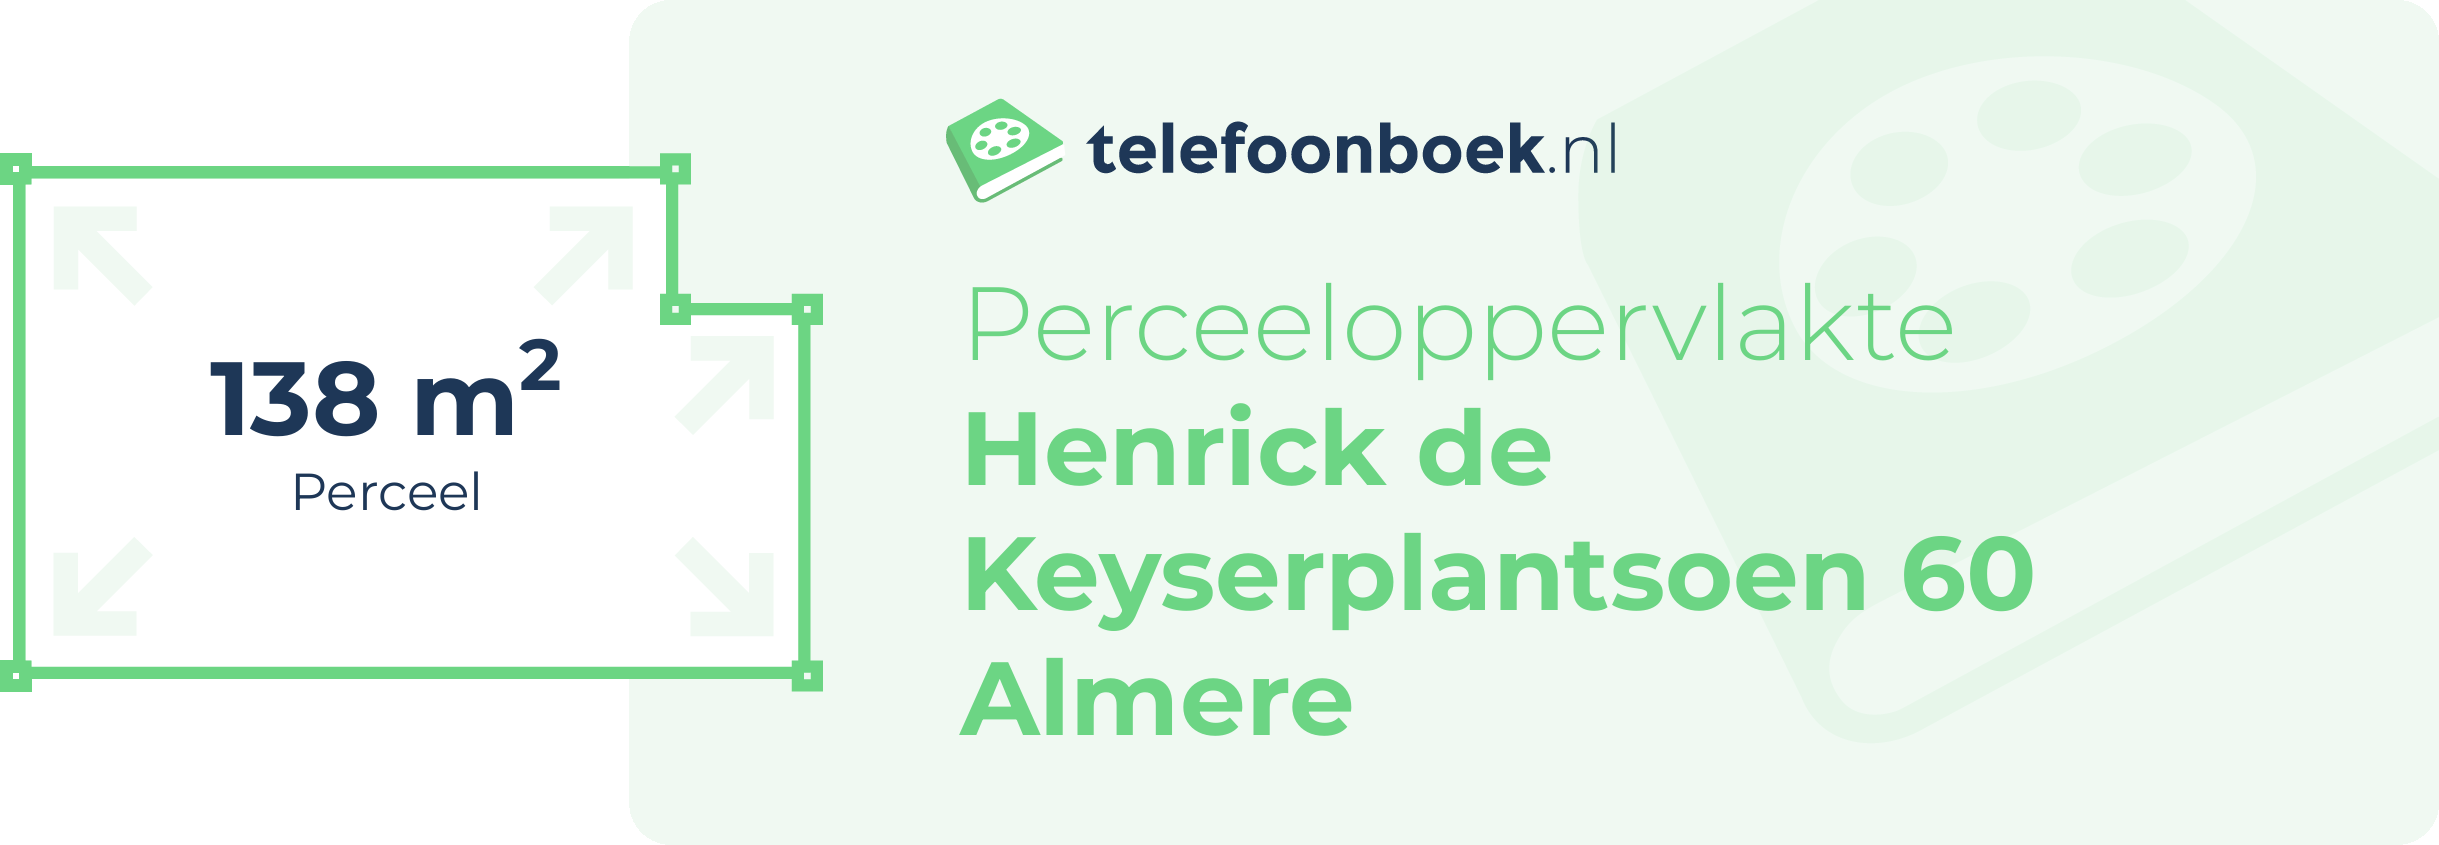 Perceeloppervlakte Henrick De Keyserplantsoen 60 Almere